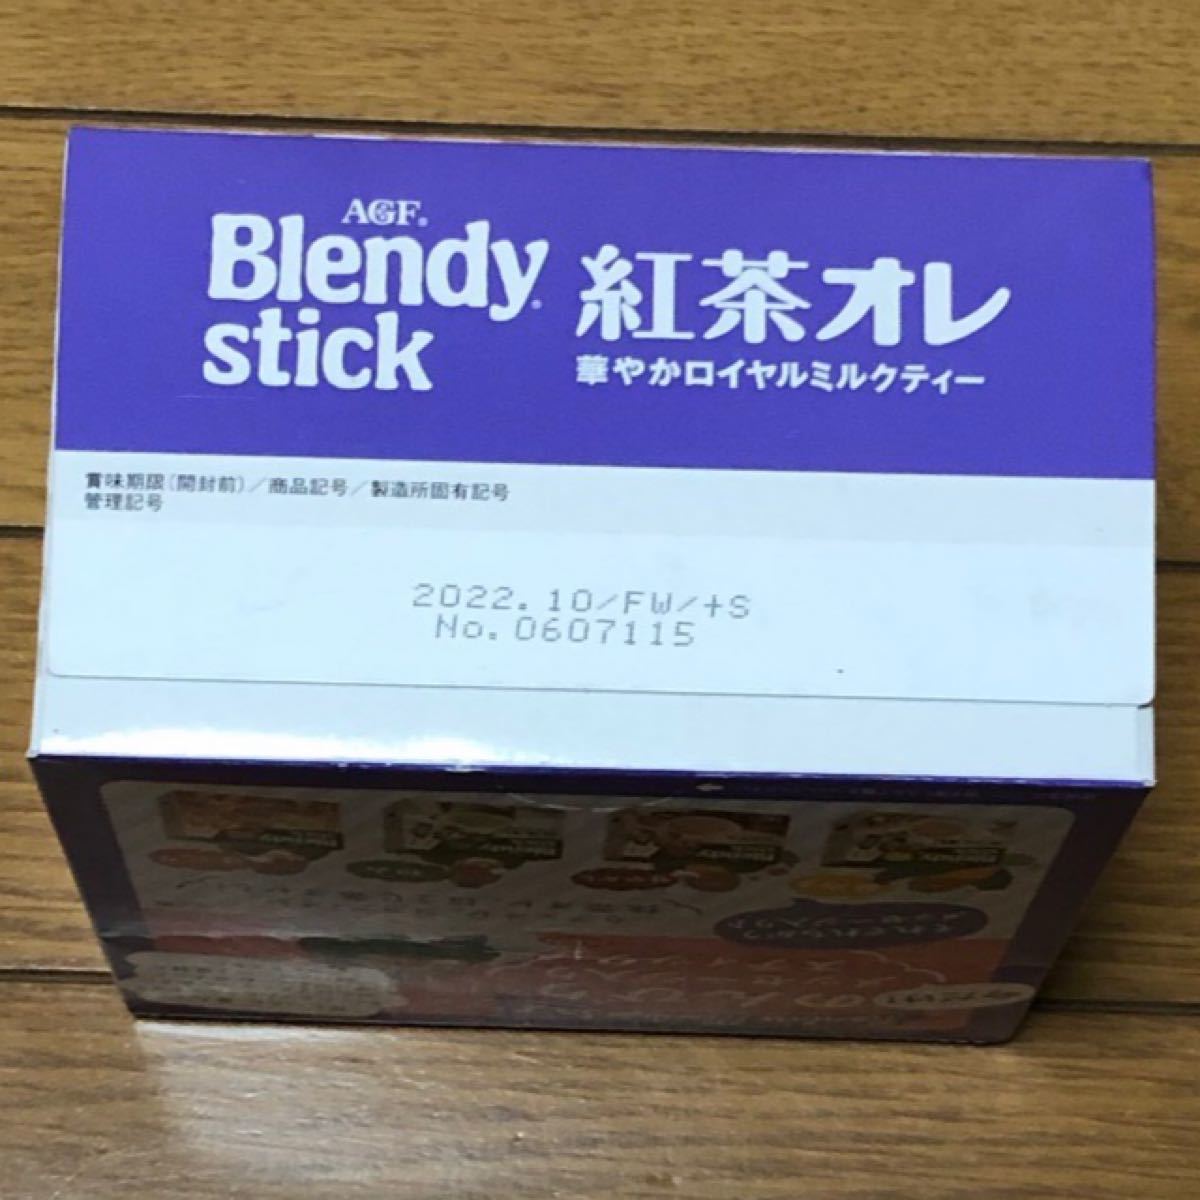 【AGF】ブレンディ スティック 紅茶オレ【30本入】 ブレンディスティック